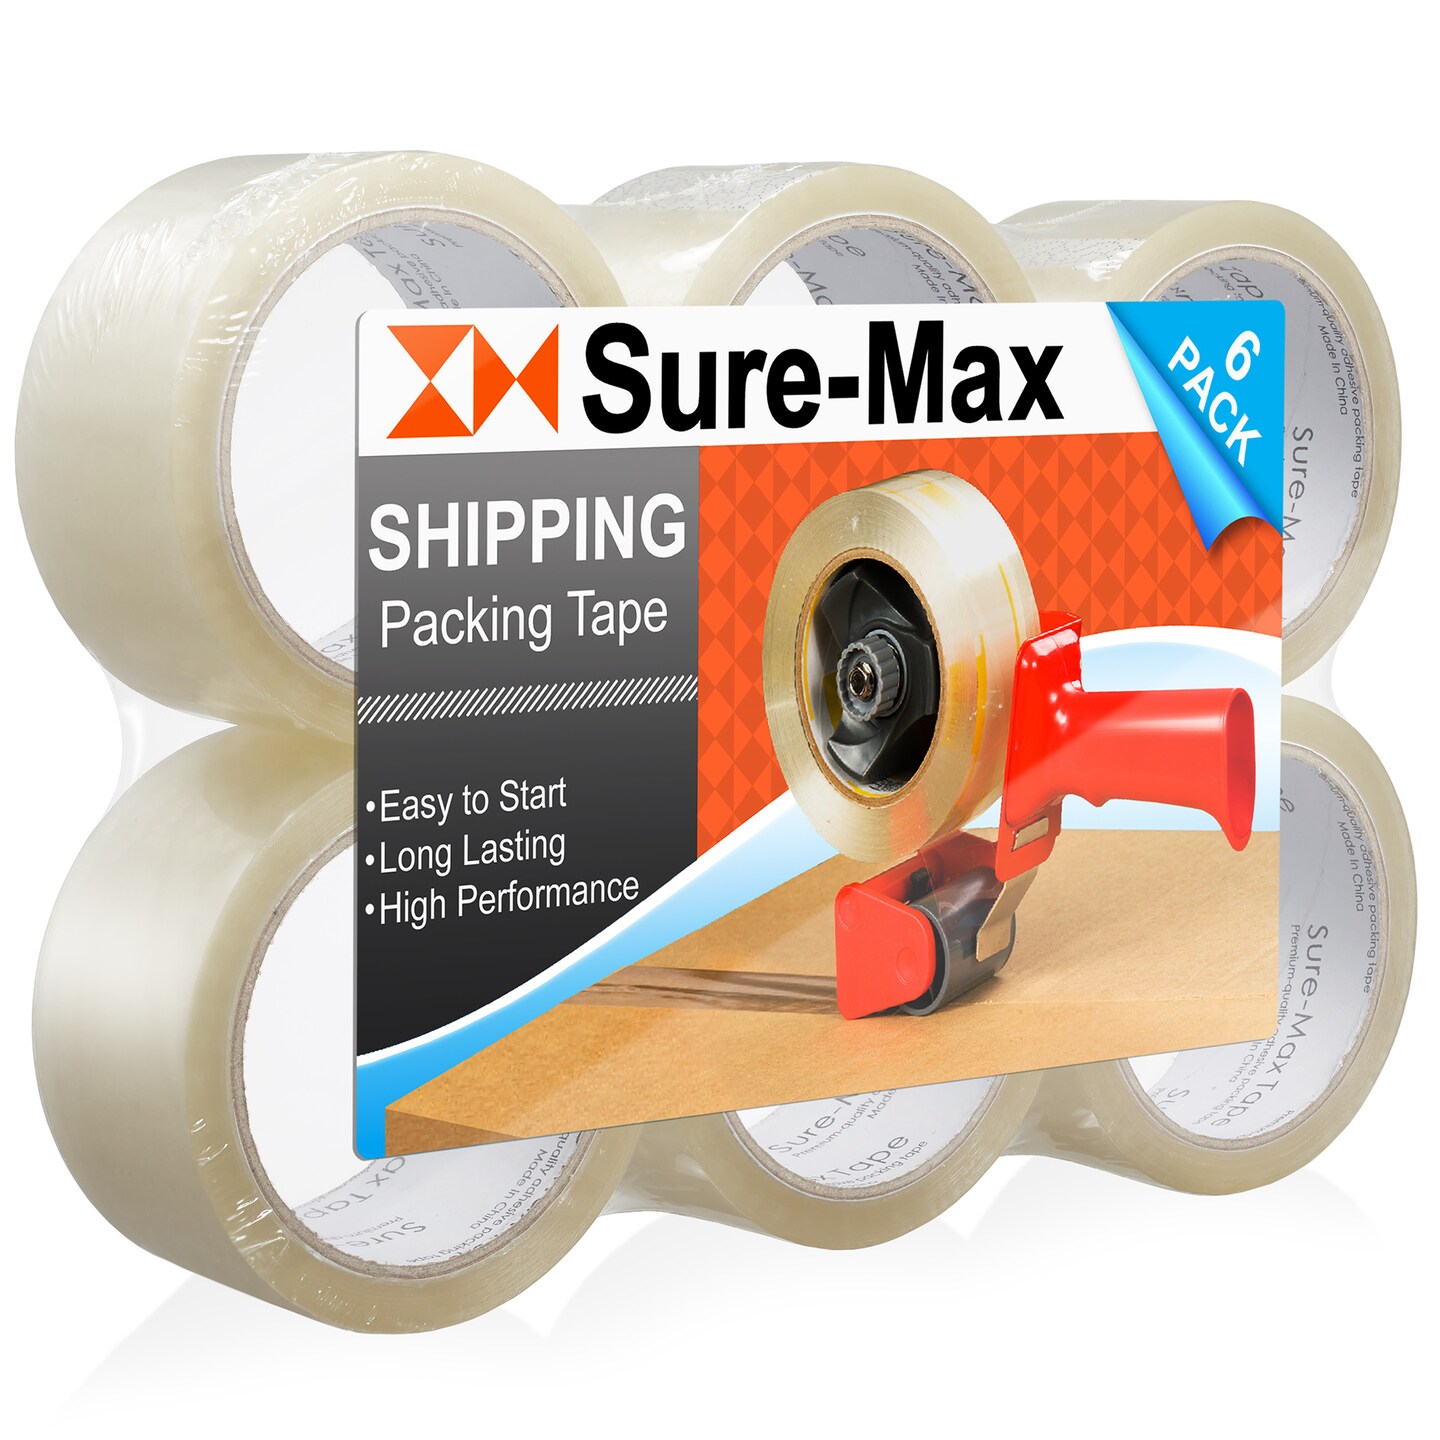 Sure-Max Premium Carton Packing Tape 2.0 mil 165 Feet (55 yards) - Clear